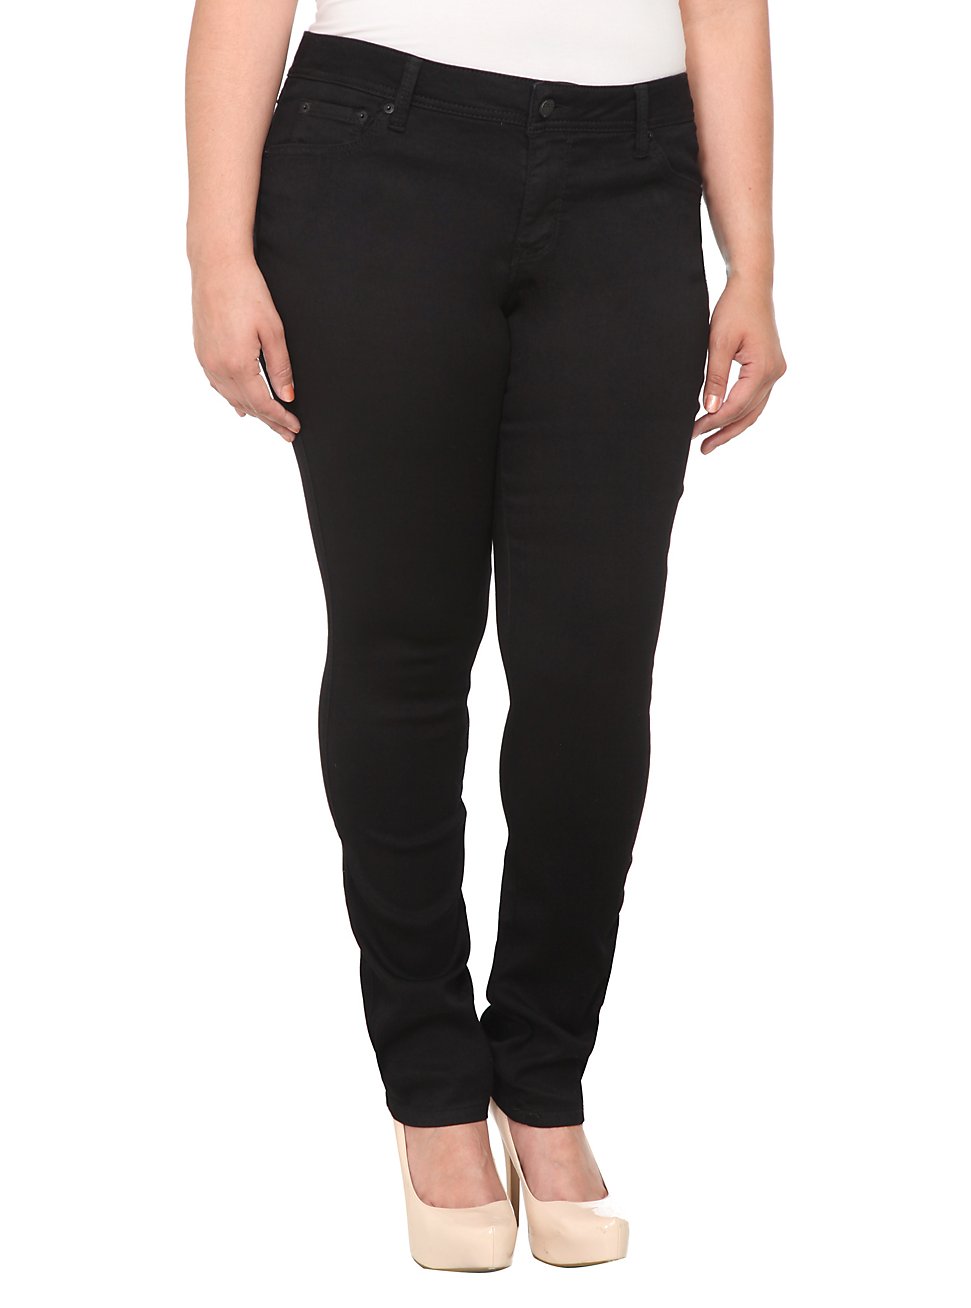 Torrid Skinny Jeans - Black Wash (Regular), BLACK, hi-res